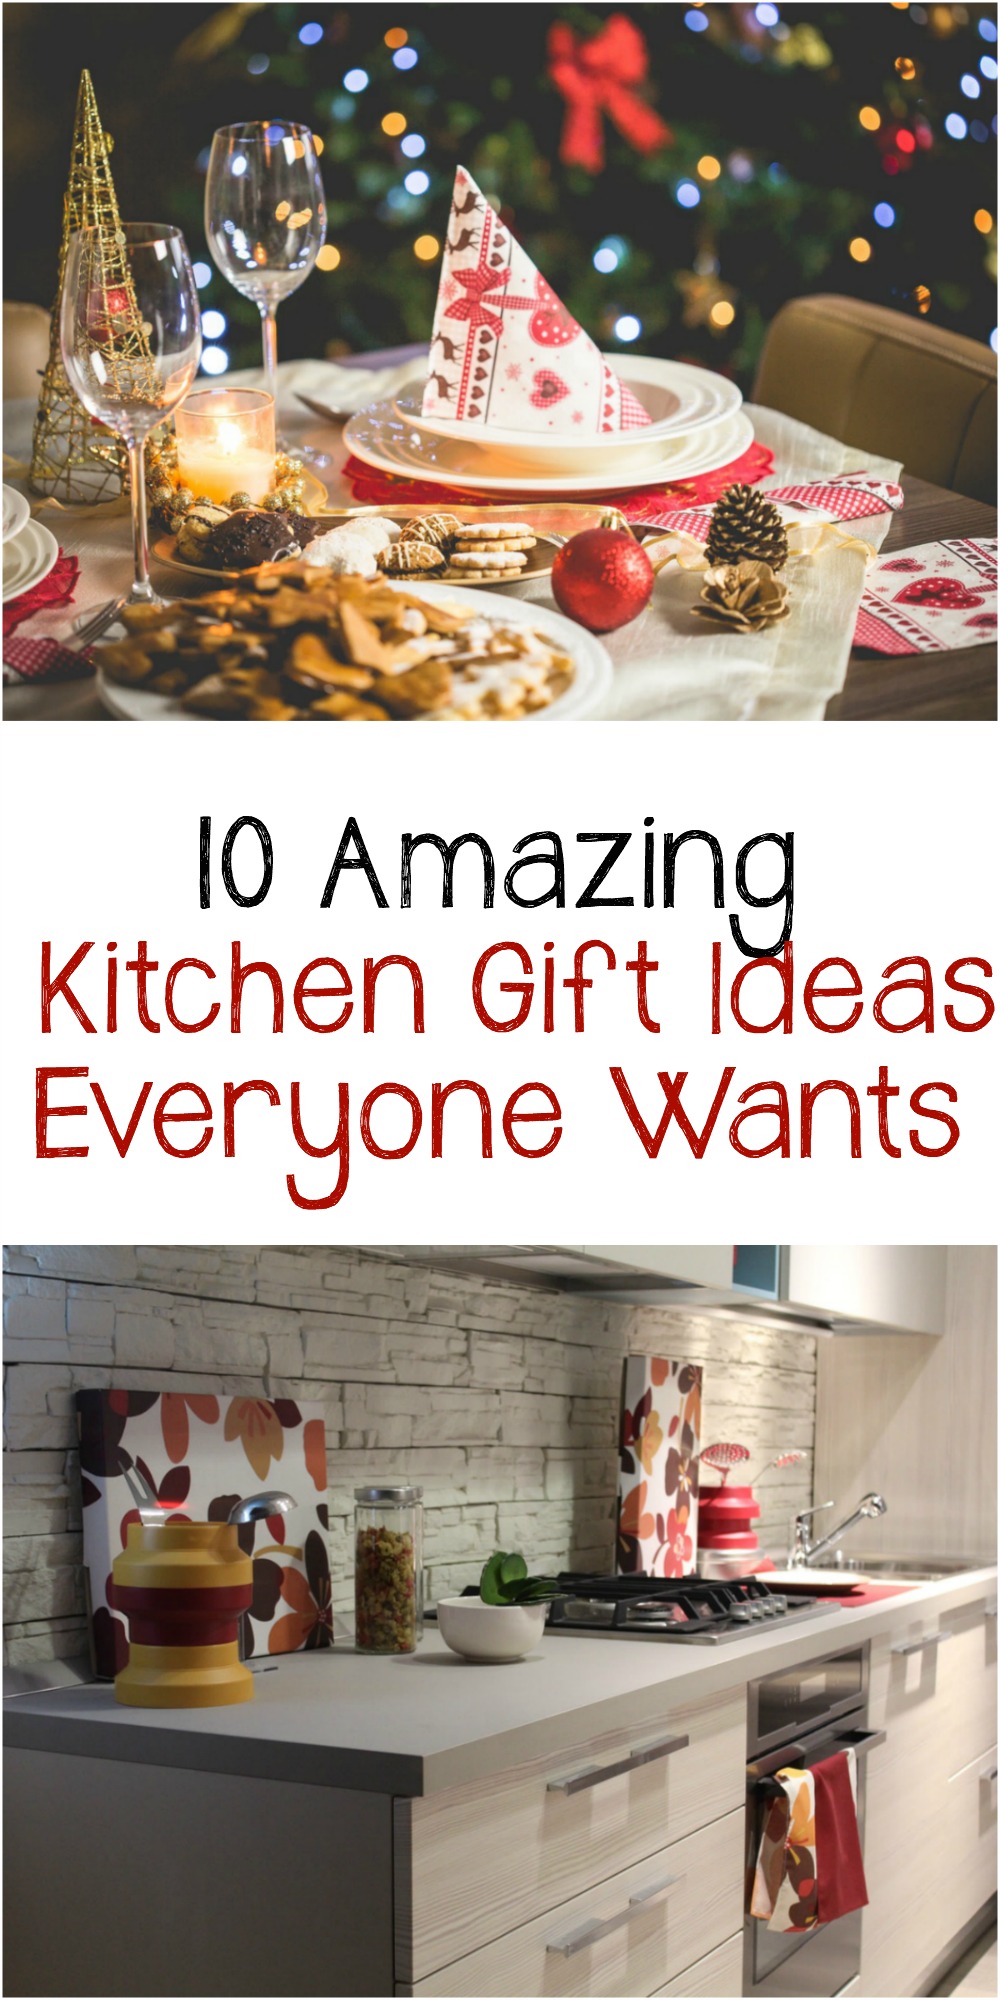 https://www.gretasday.com/wp-content/uploads/2017/11/10-amazing-kitchen-gift-ideas-everyone-wants.jpg